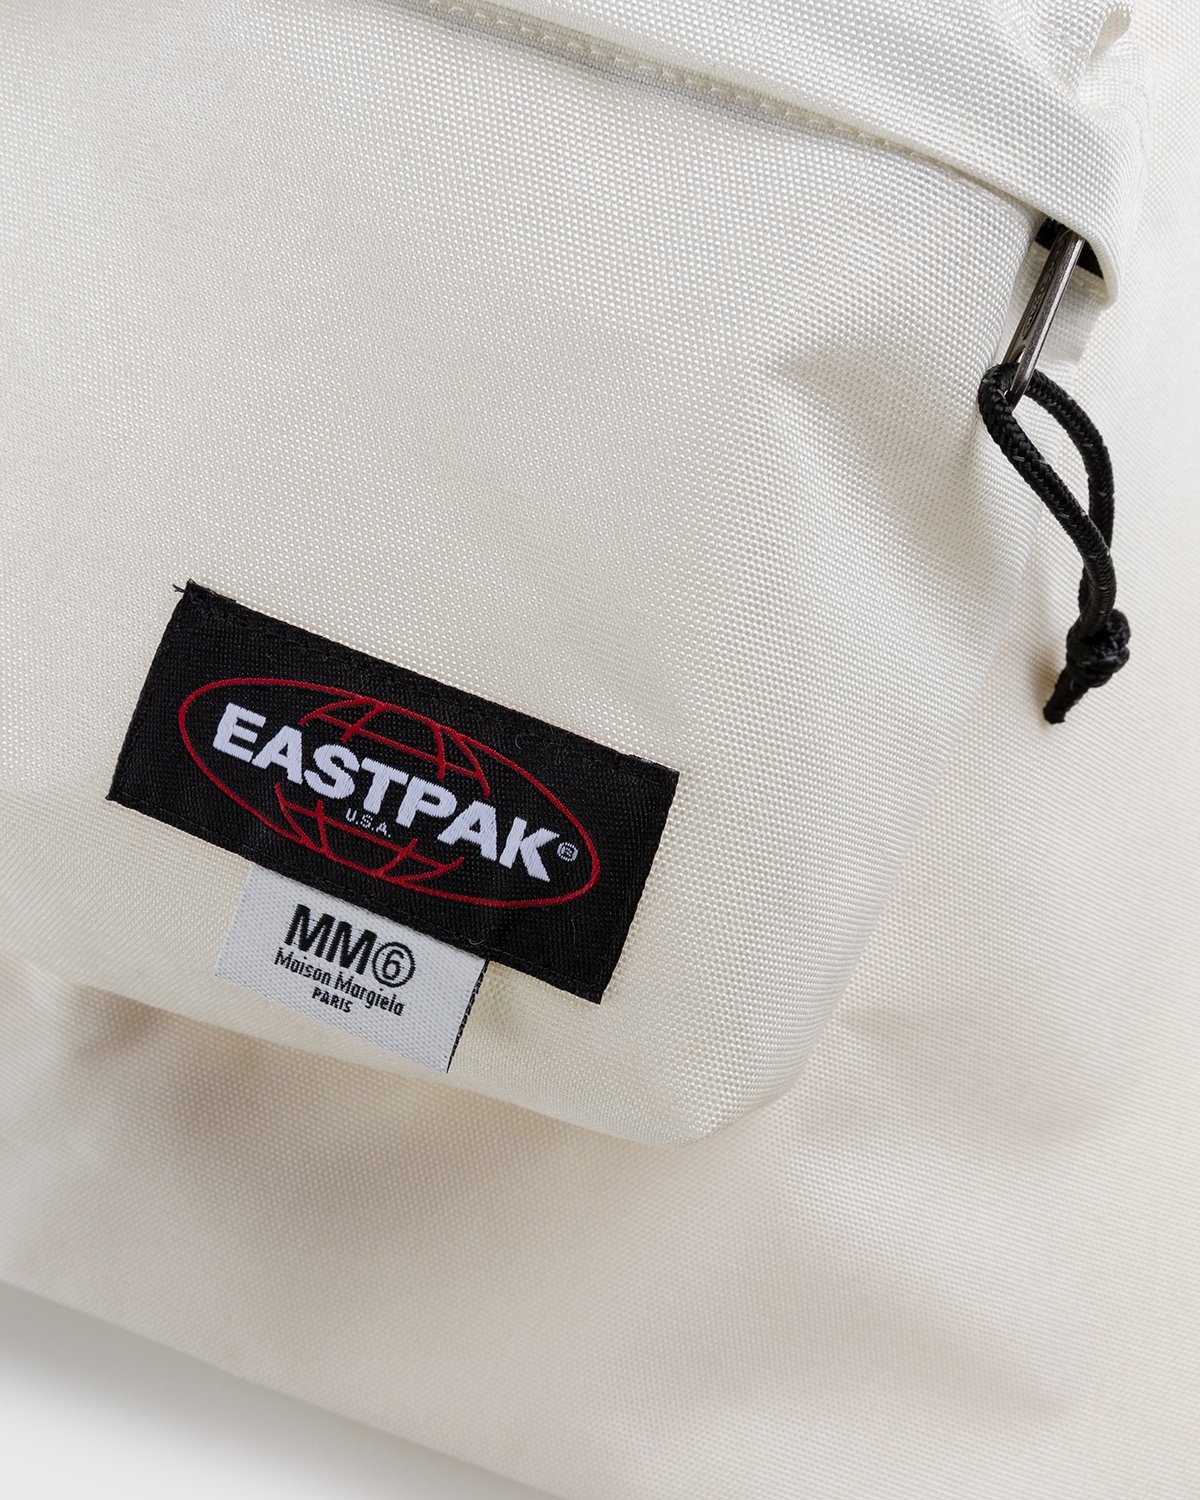 MM6 Maison Margiela x Eastpak – Borsa Shopping Bag White - Bags - White - Image 6